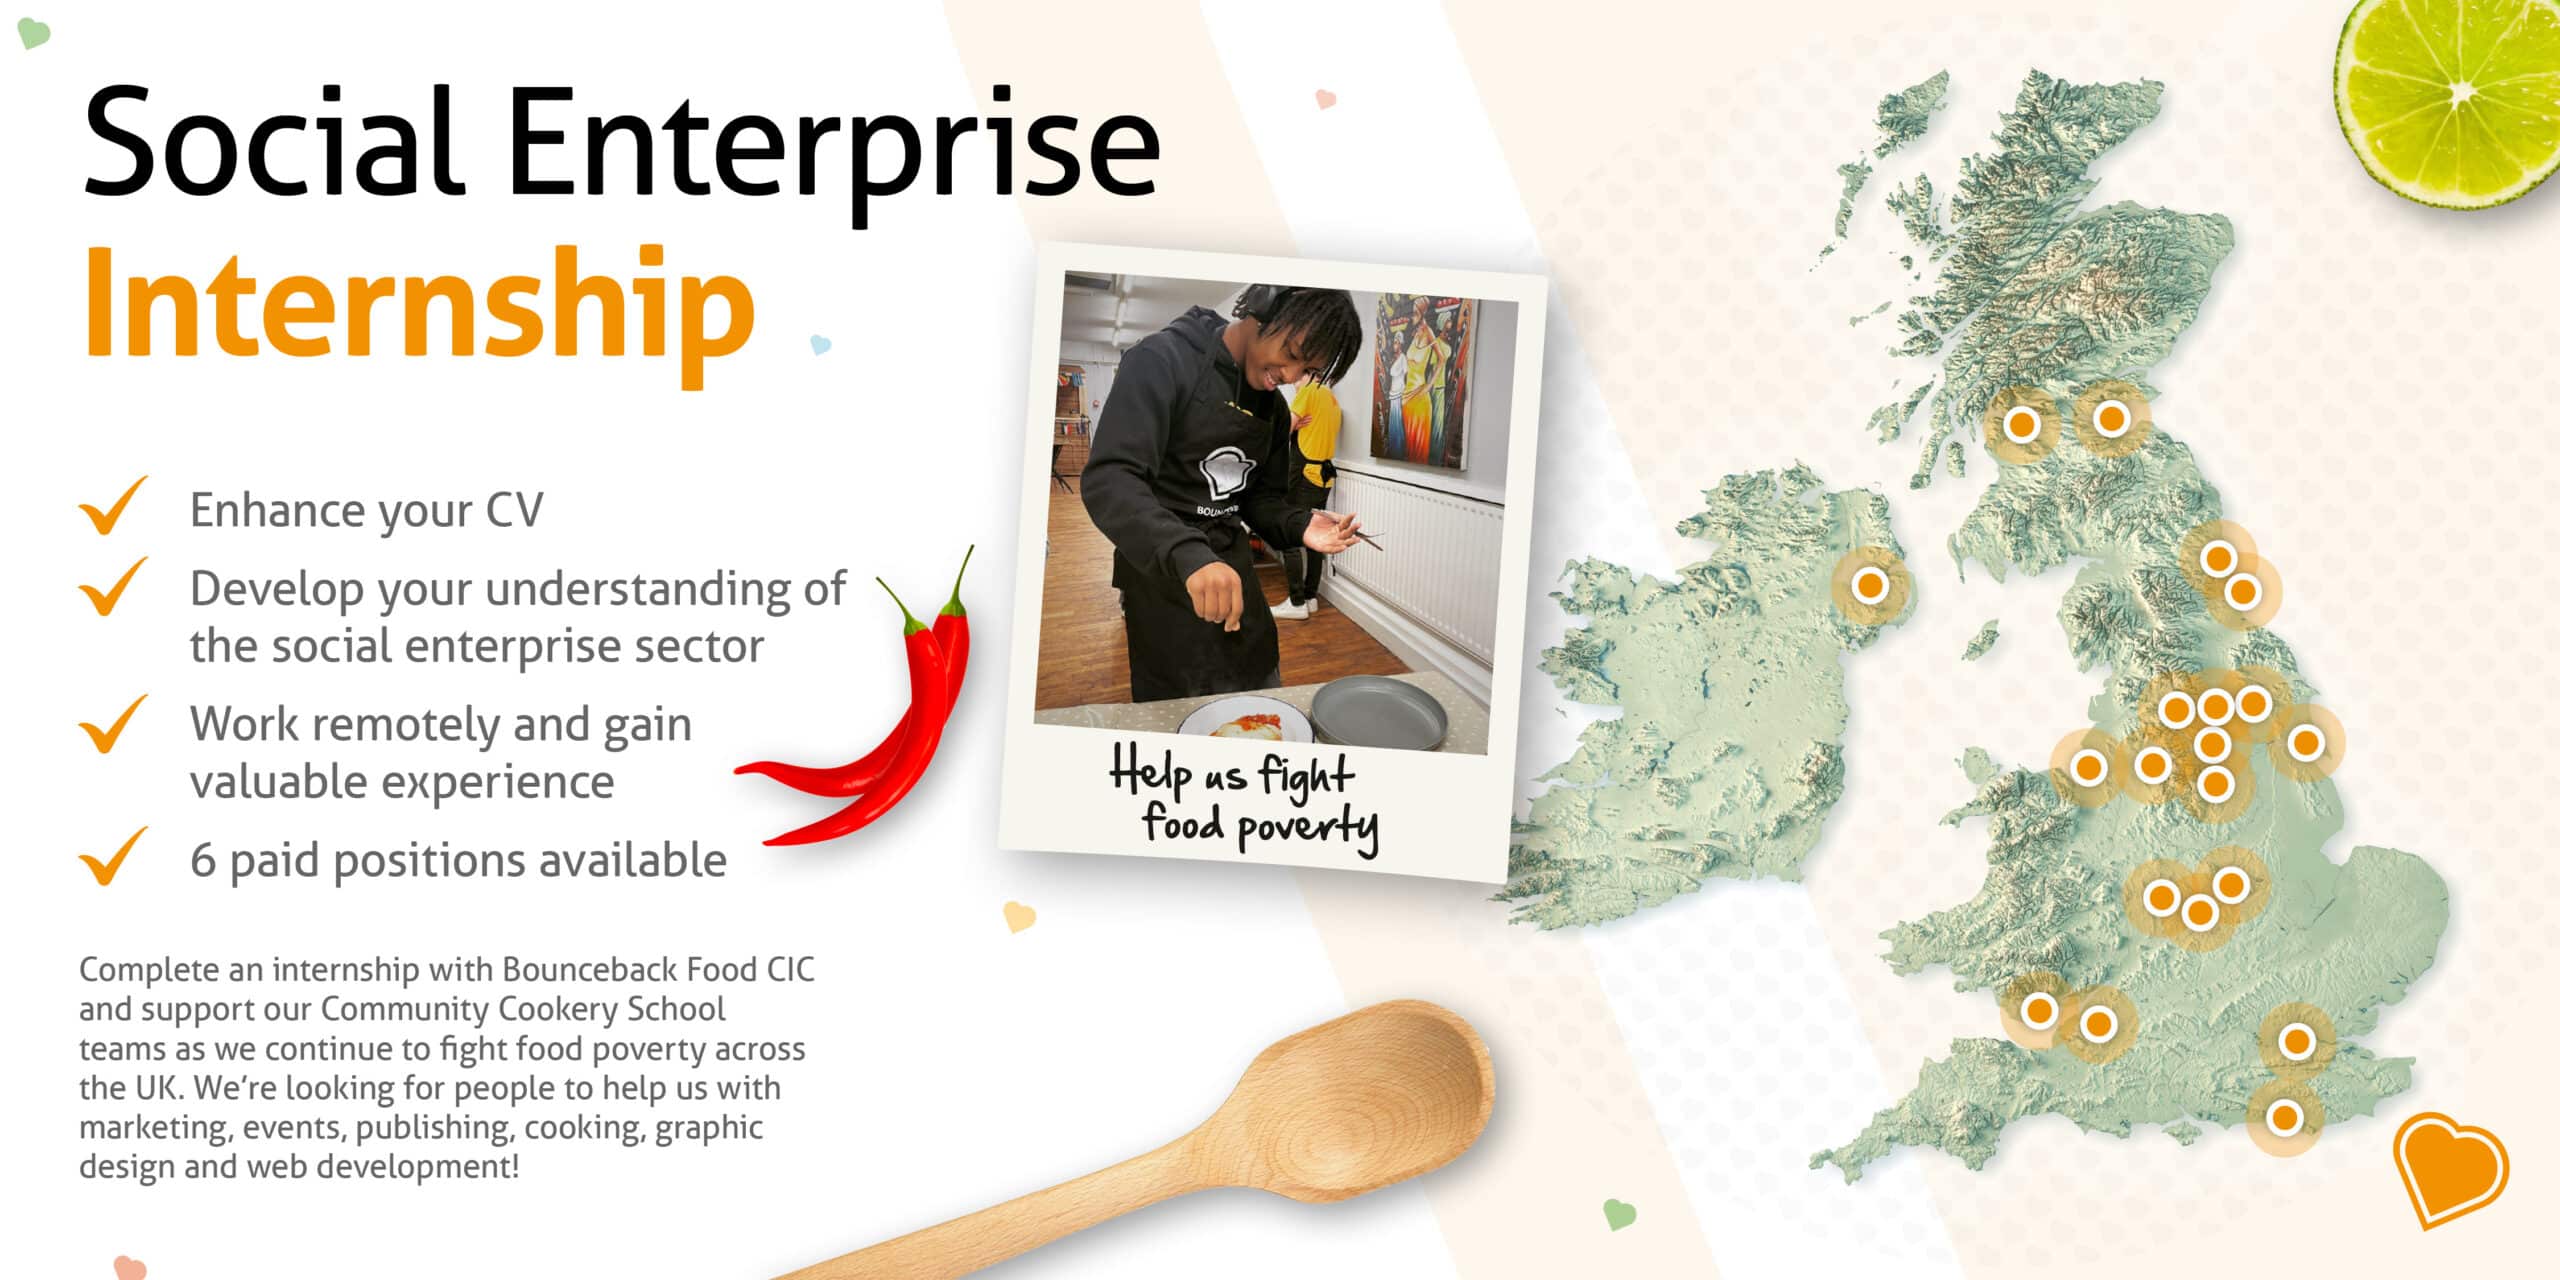 A map of the UK showing details of the Bounceback Food social enterprise internship programme